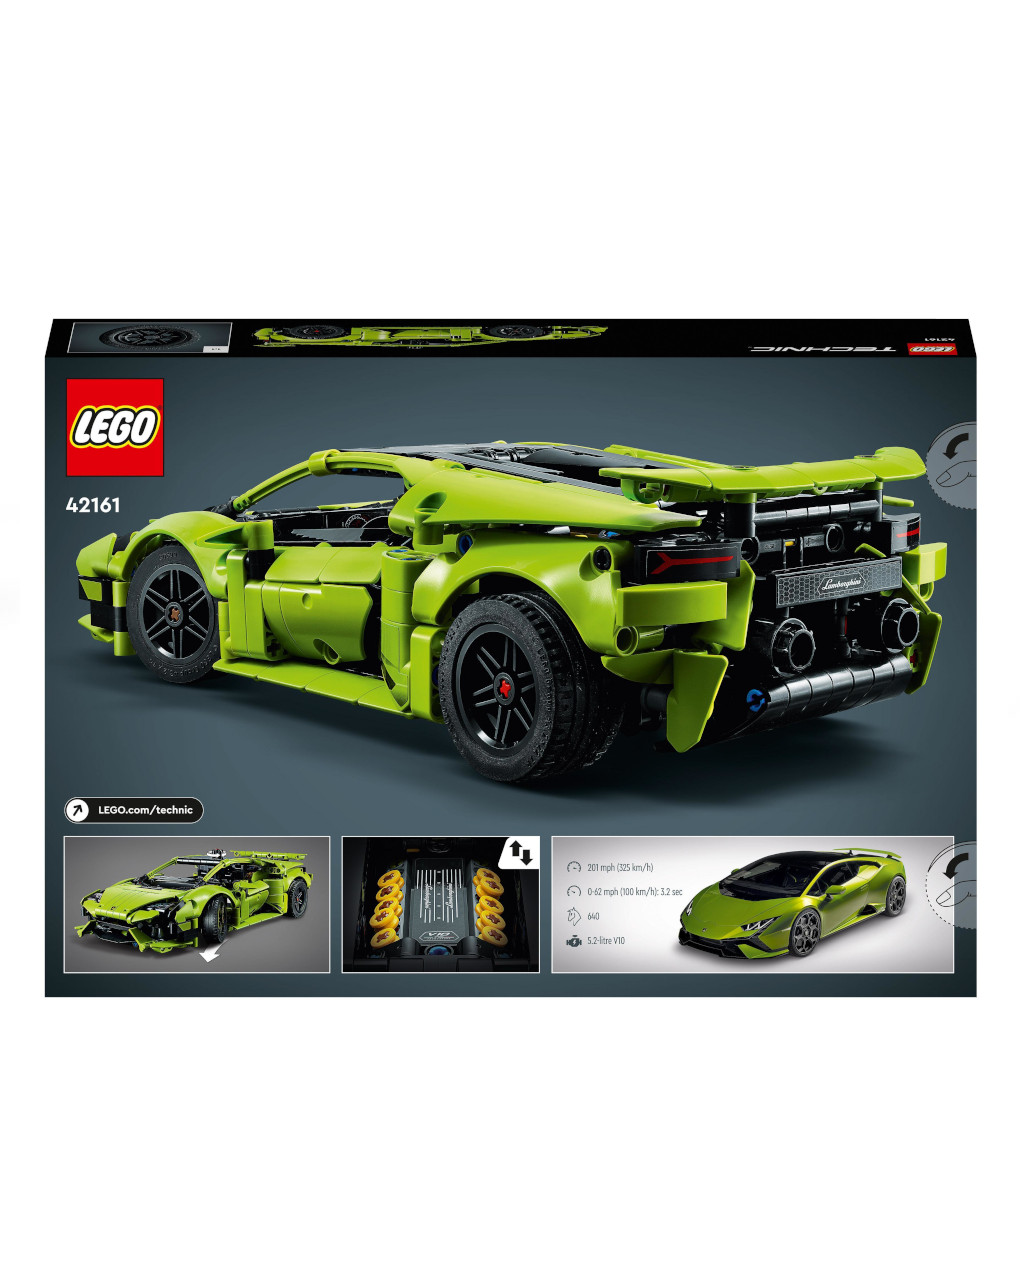 Lamborghini huracán tecnica 42161 -  lego technic - LEGO